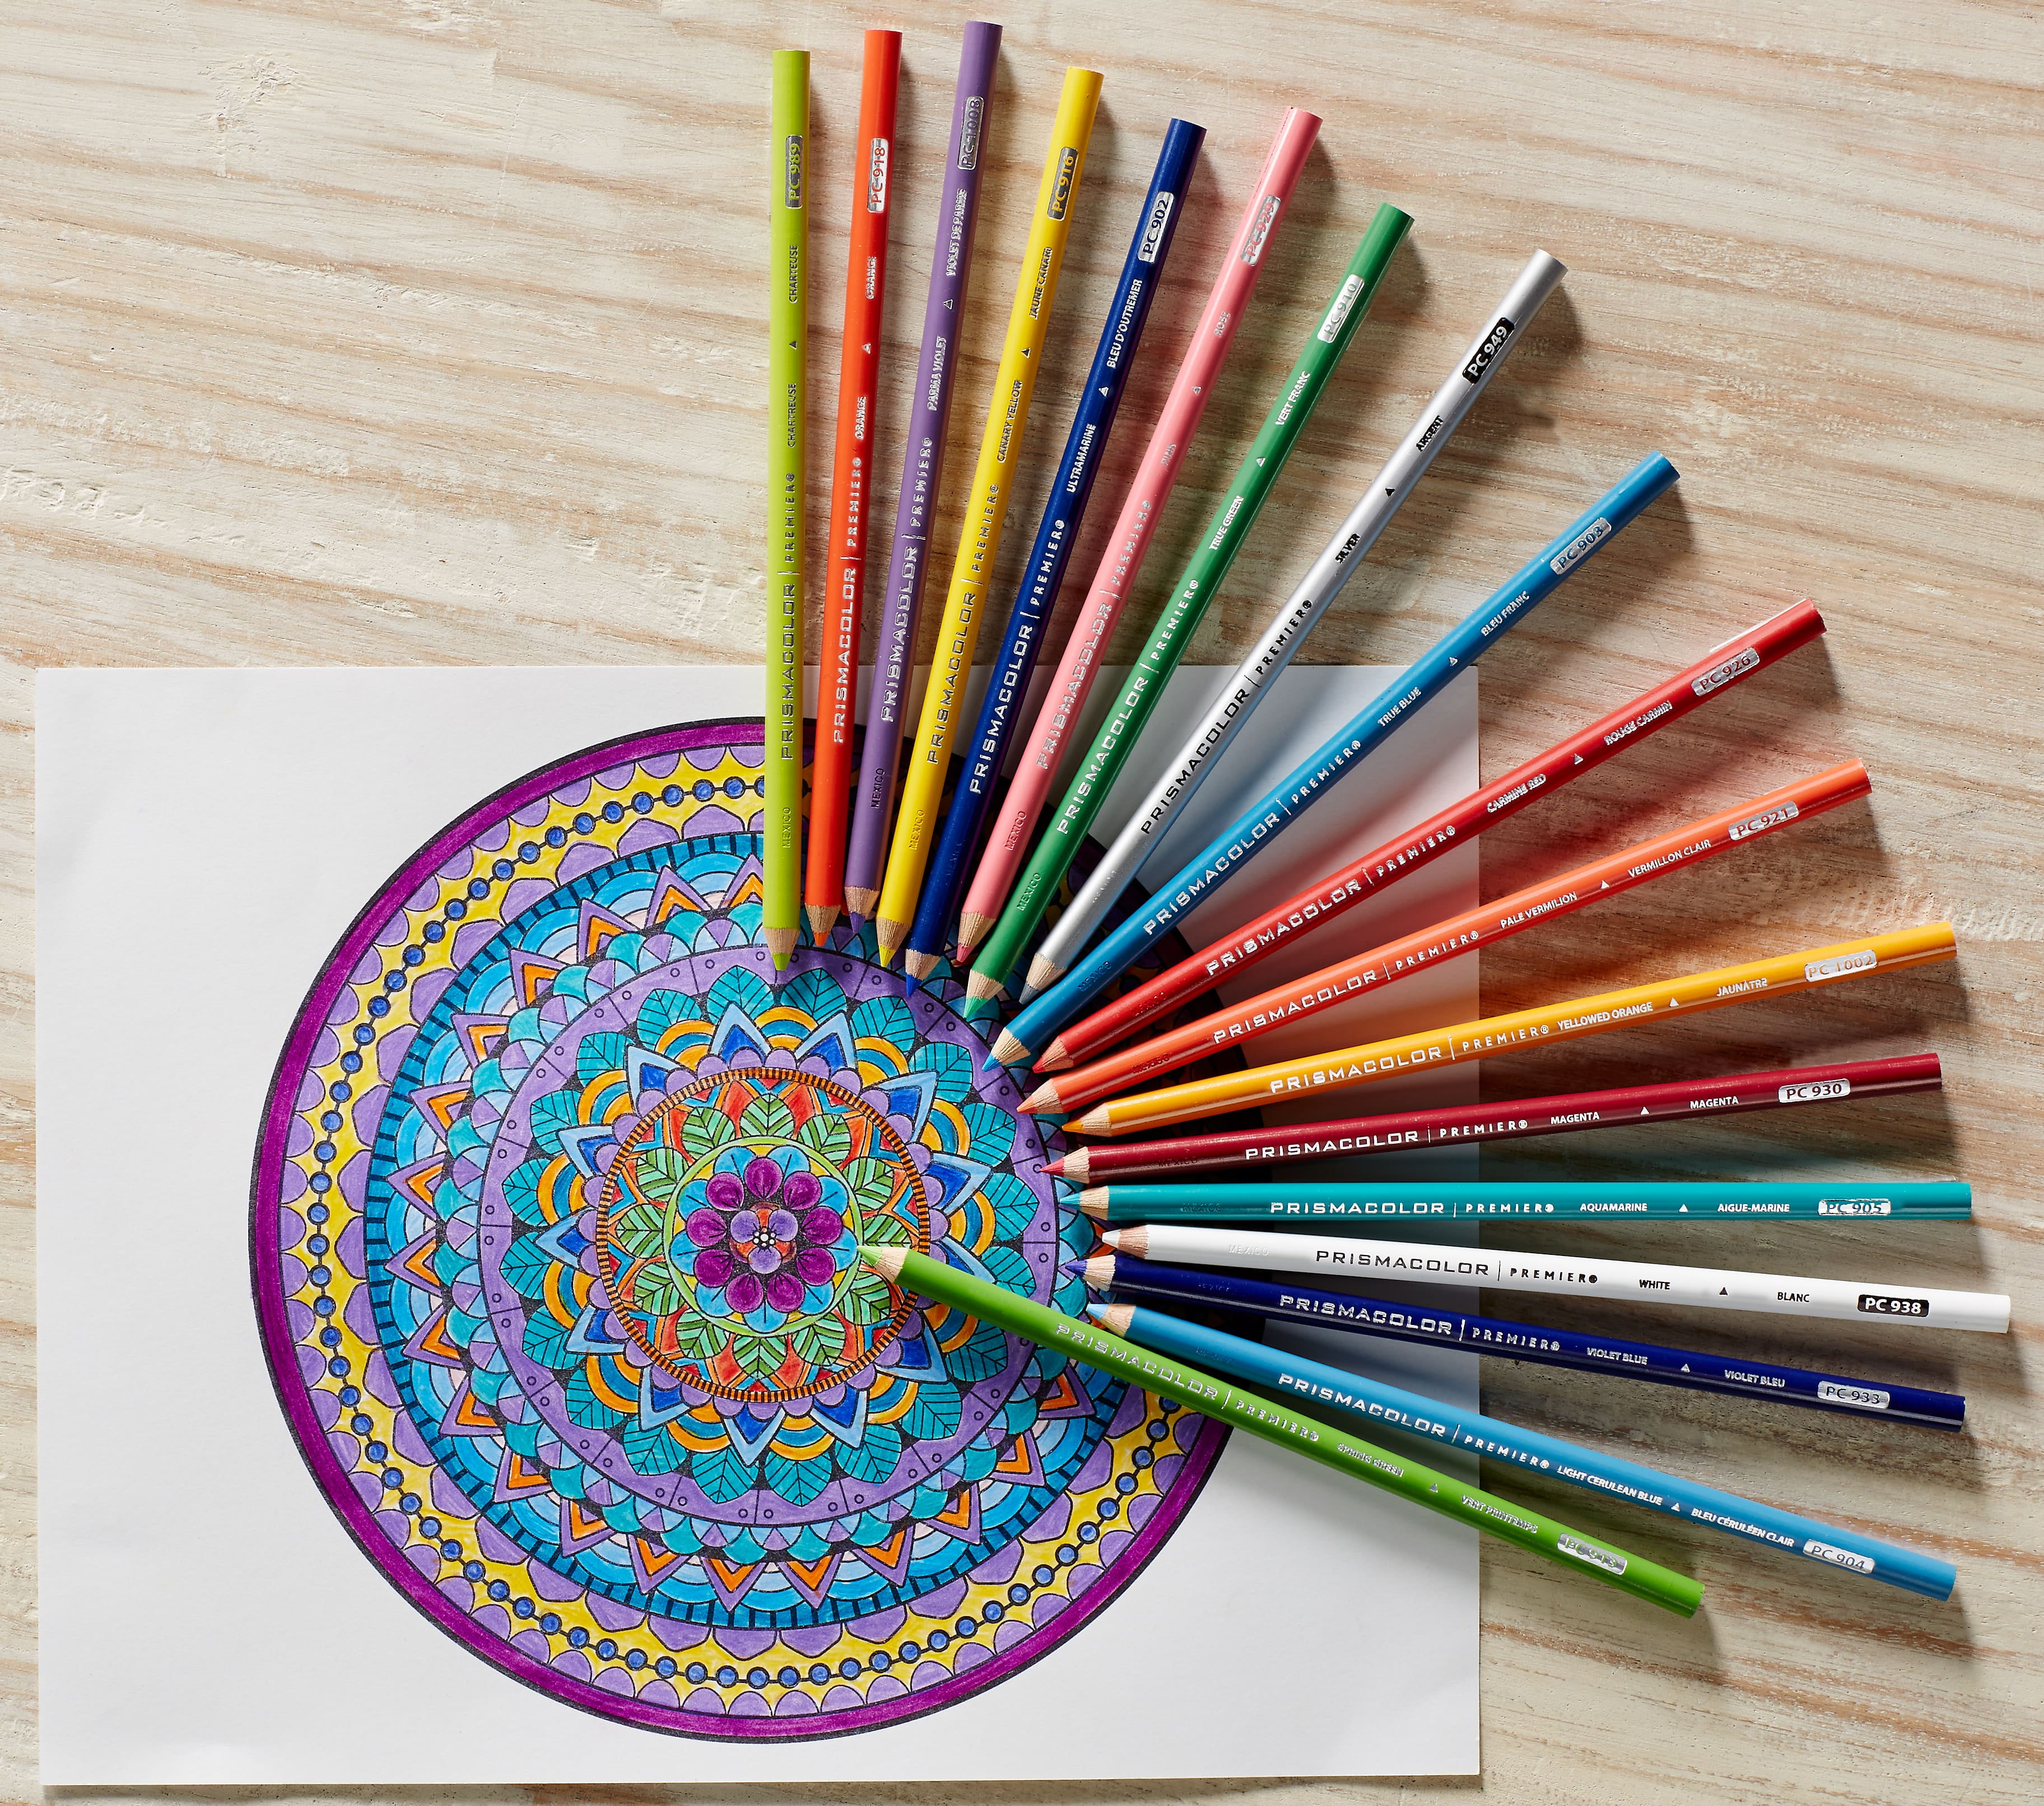 Prismacolor Scholar Art Pencil Set - Assorted Colors, Classroom Pack, Set  of 288